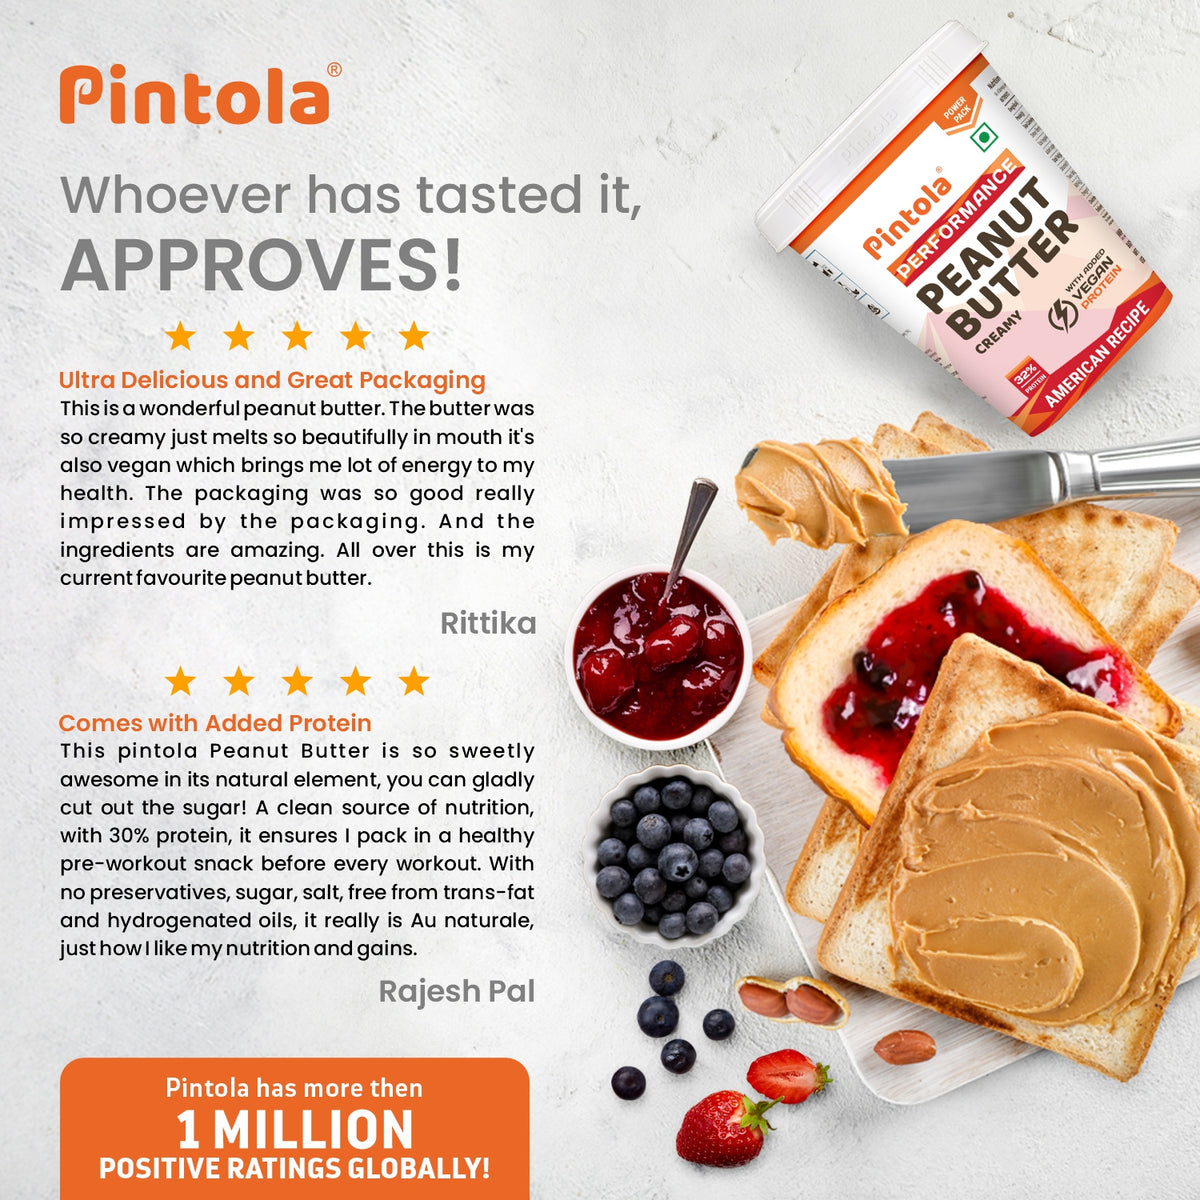 American Recipe Performance Series Peanut Butter | Vegan Protein | 32% Protein | High Protein &amp; Fiber